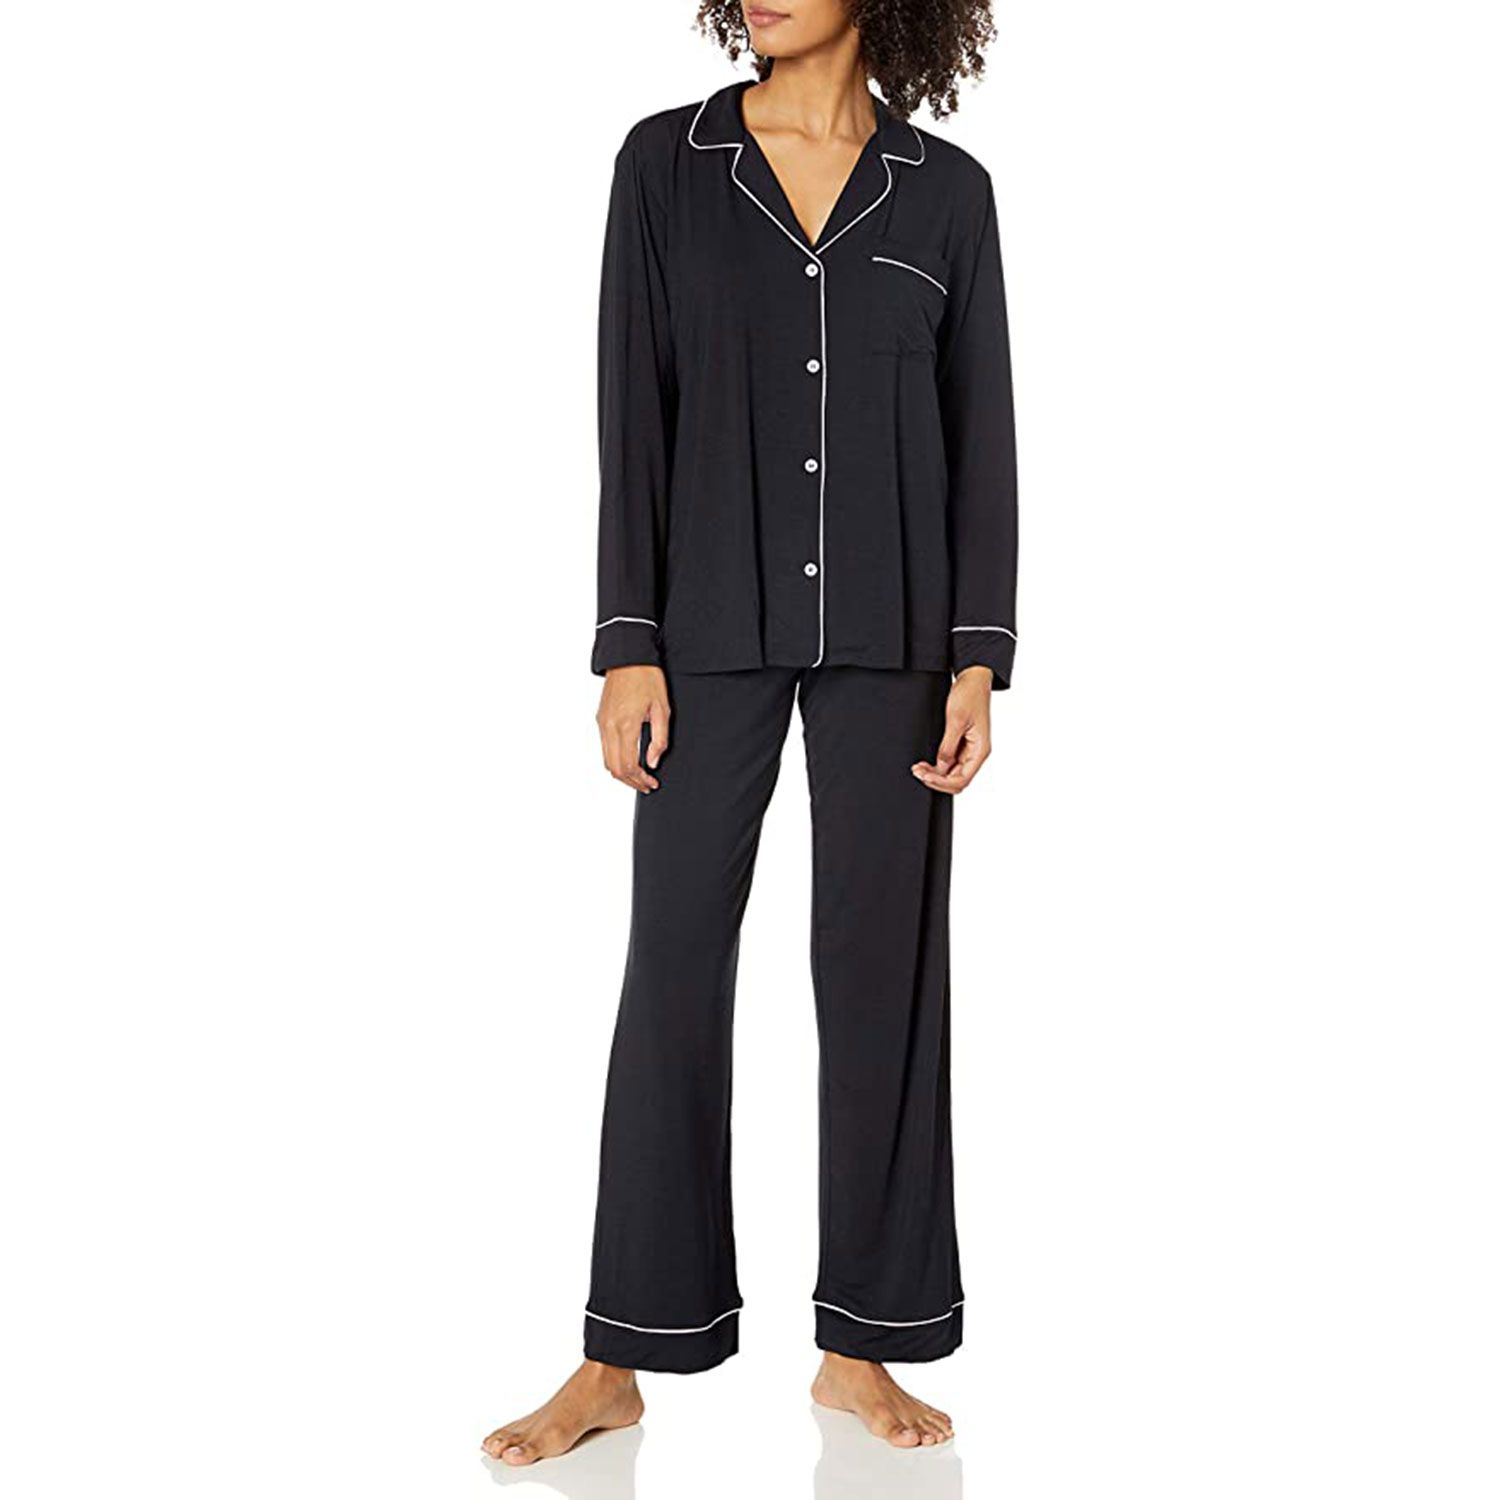 Eberjey Gisele Classic Women's Pajama Set | Long Sleeve Shirt